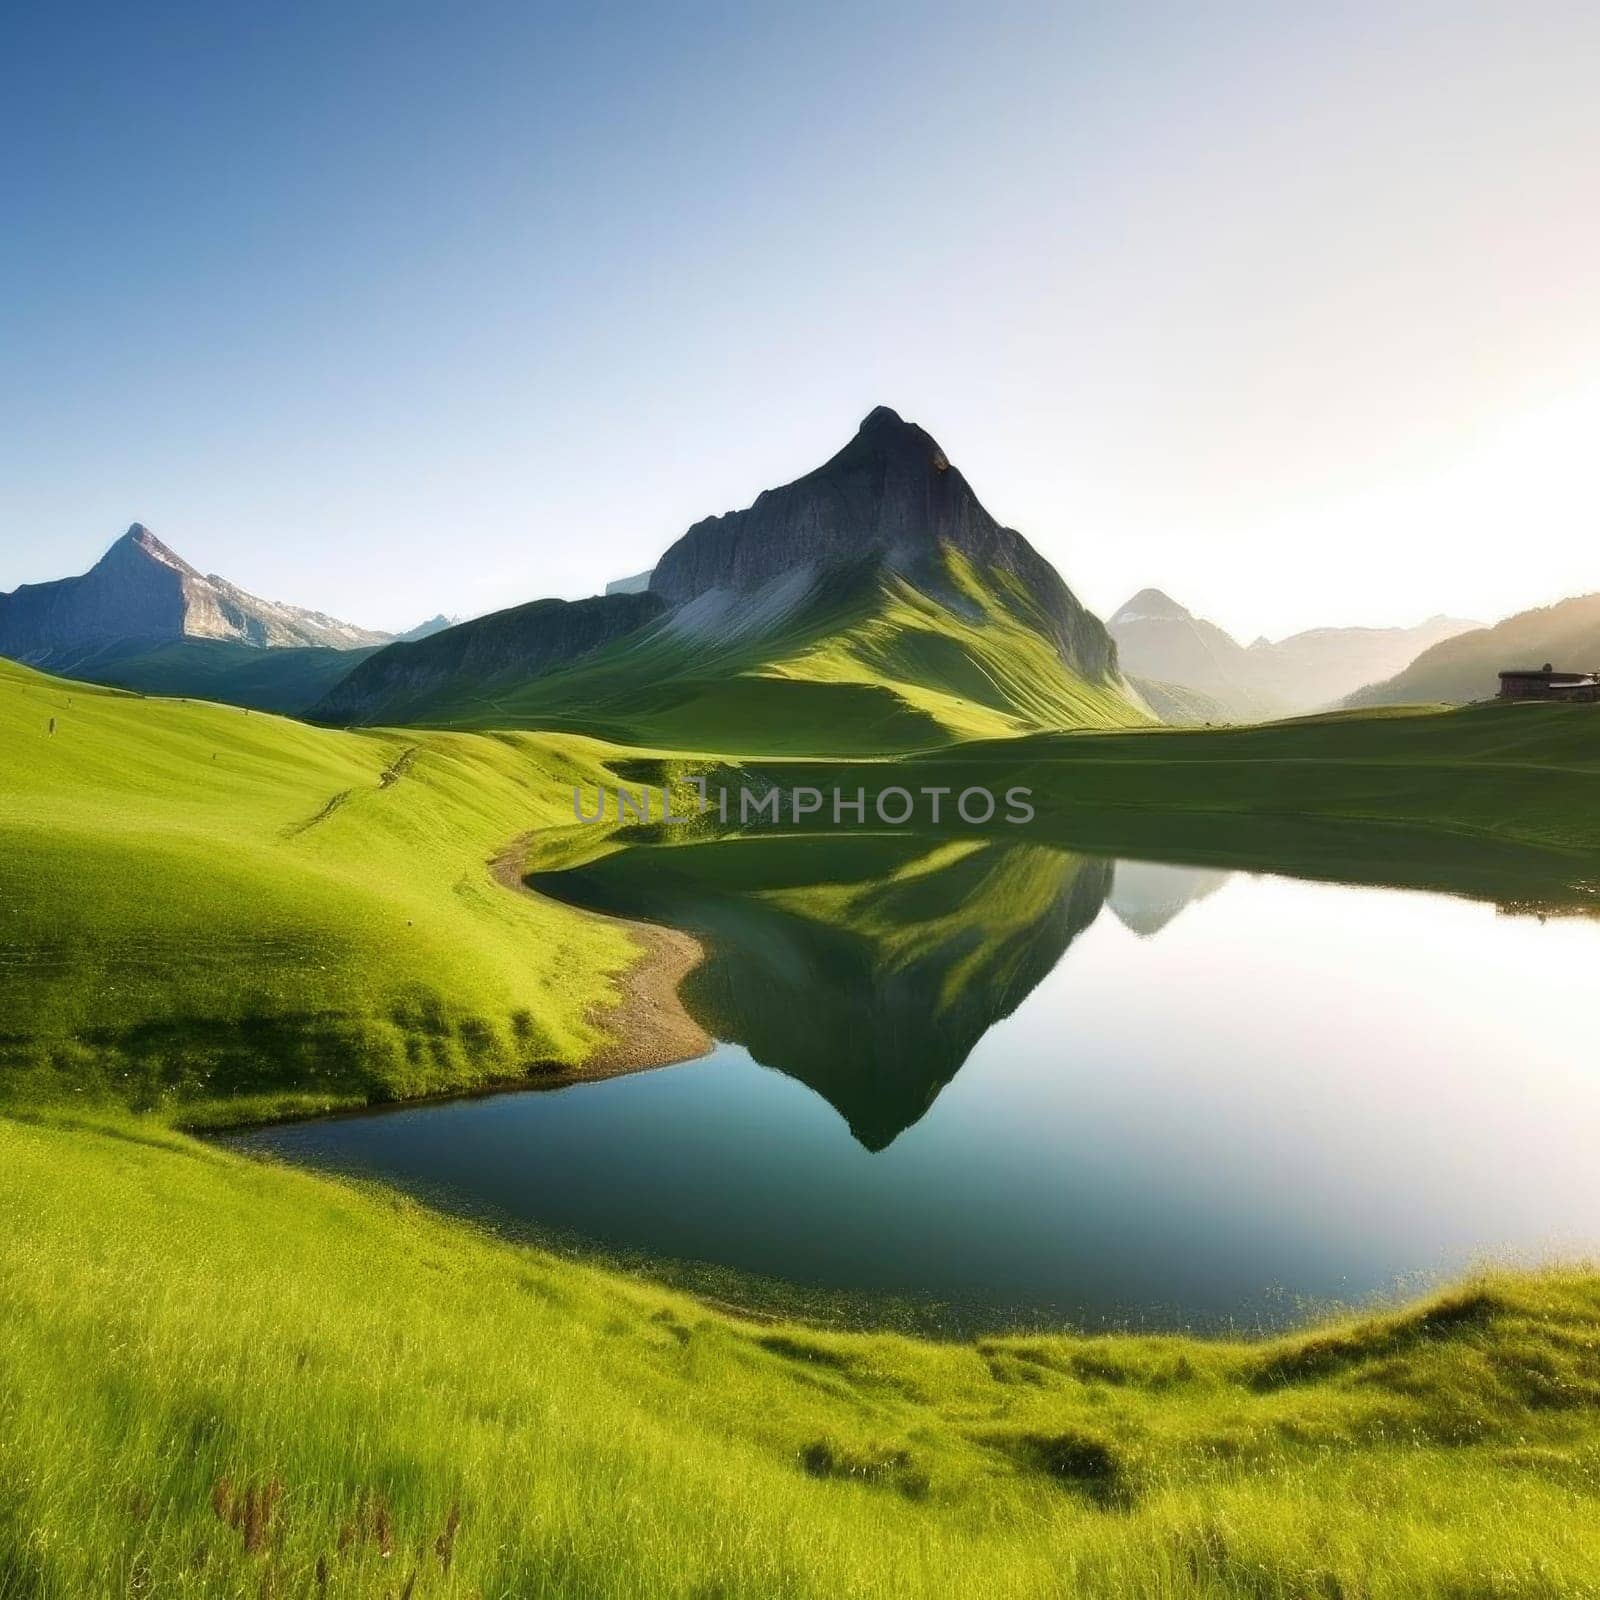 Mountain lake with reflection in the water by eduardobellotto